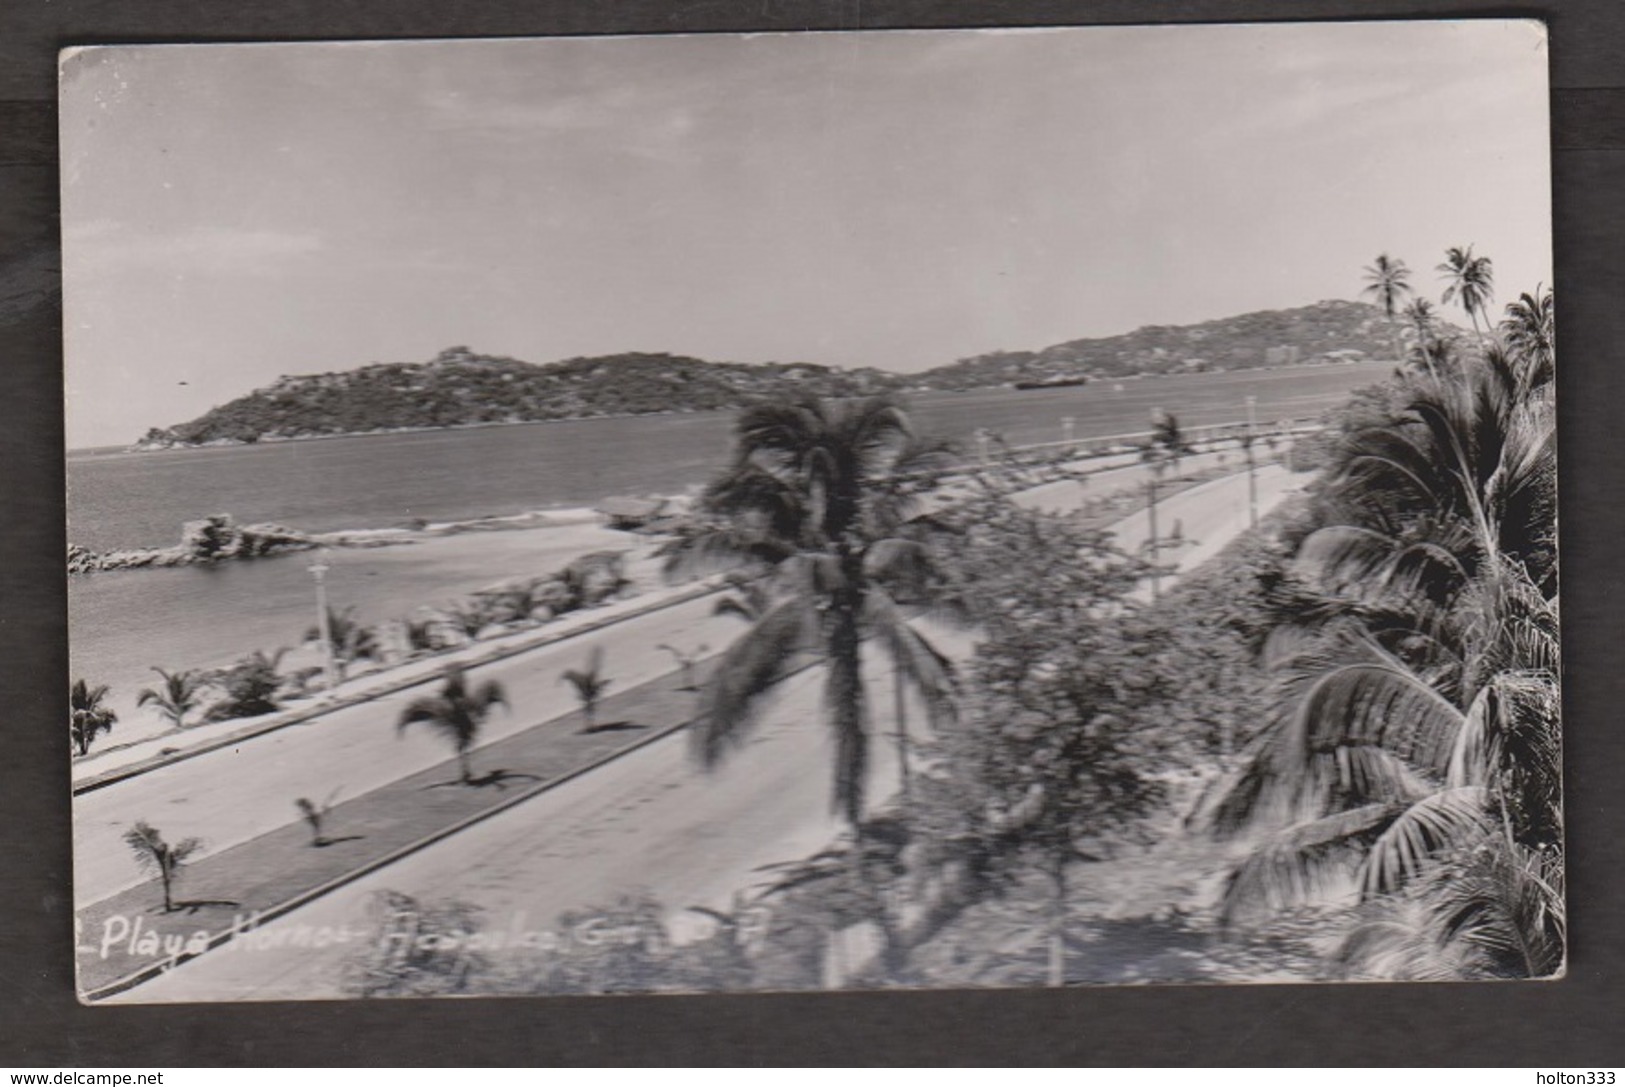 View Of Playa Hornos, Acapulco, Mexico - Real Photo - Unused 1950s - Mexico